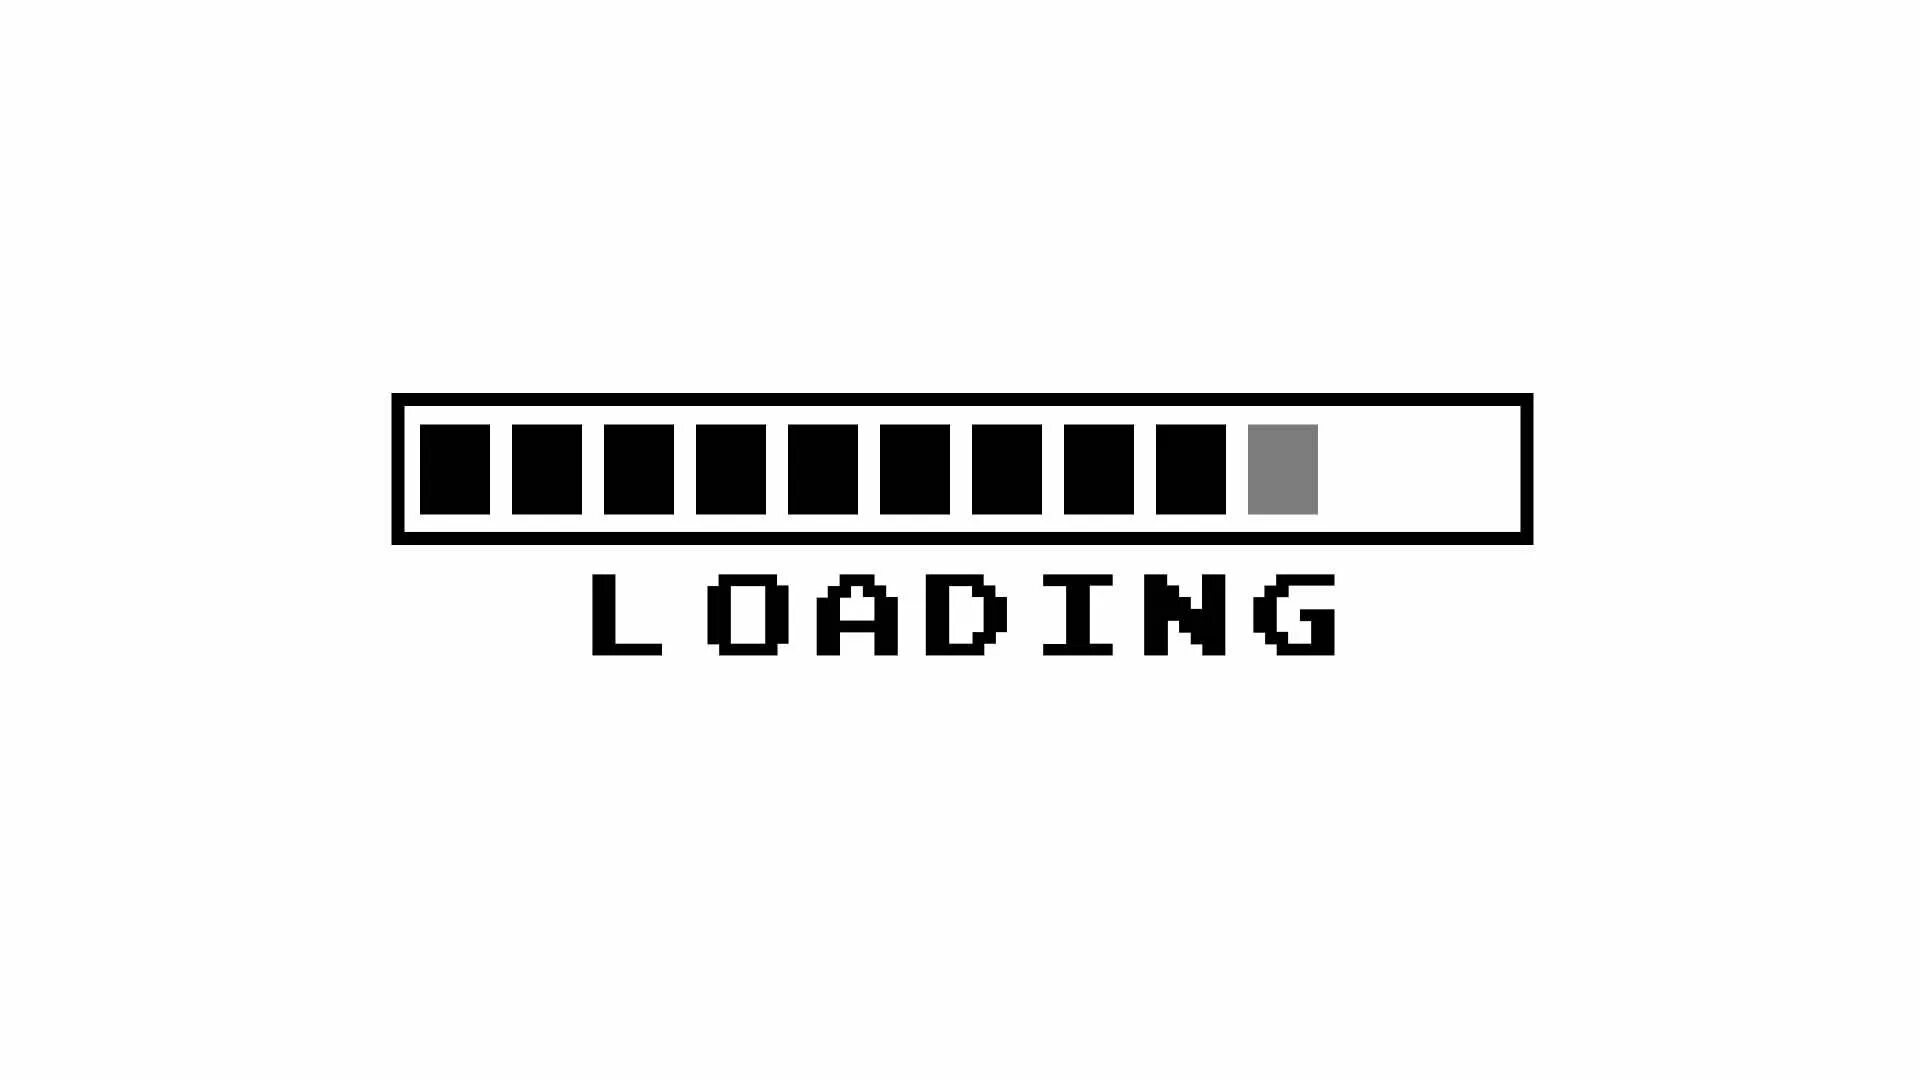 Stuck loading. Loading без фона. Надпись loading. Надпись загрузка. Значок загрузки.